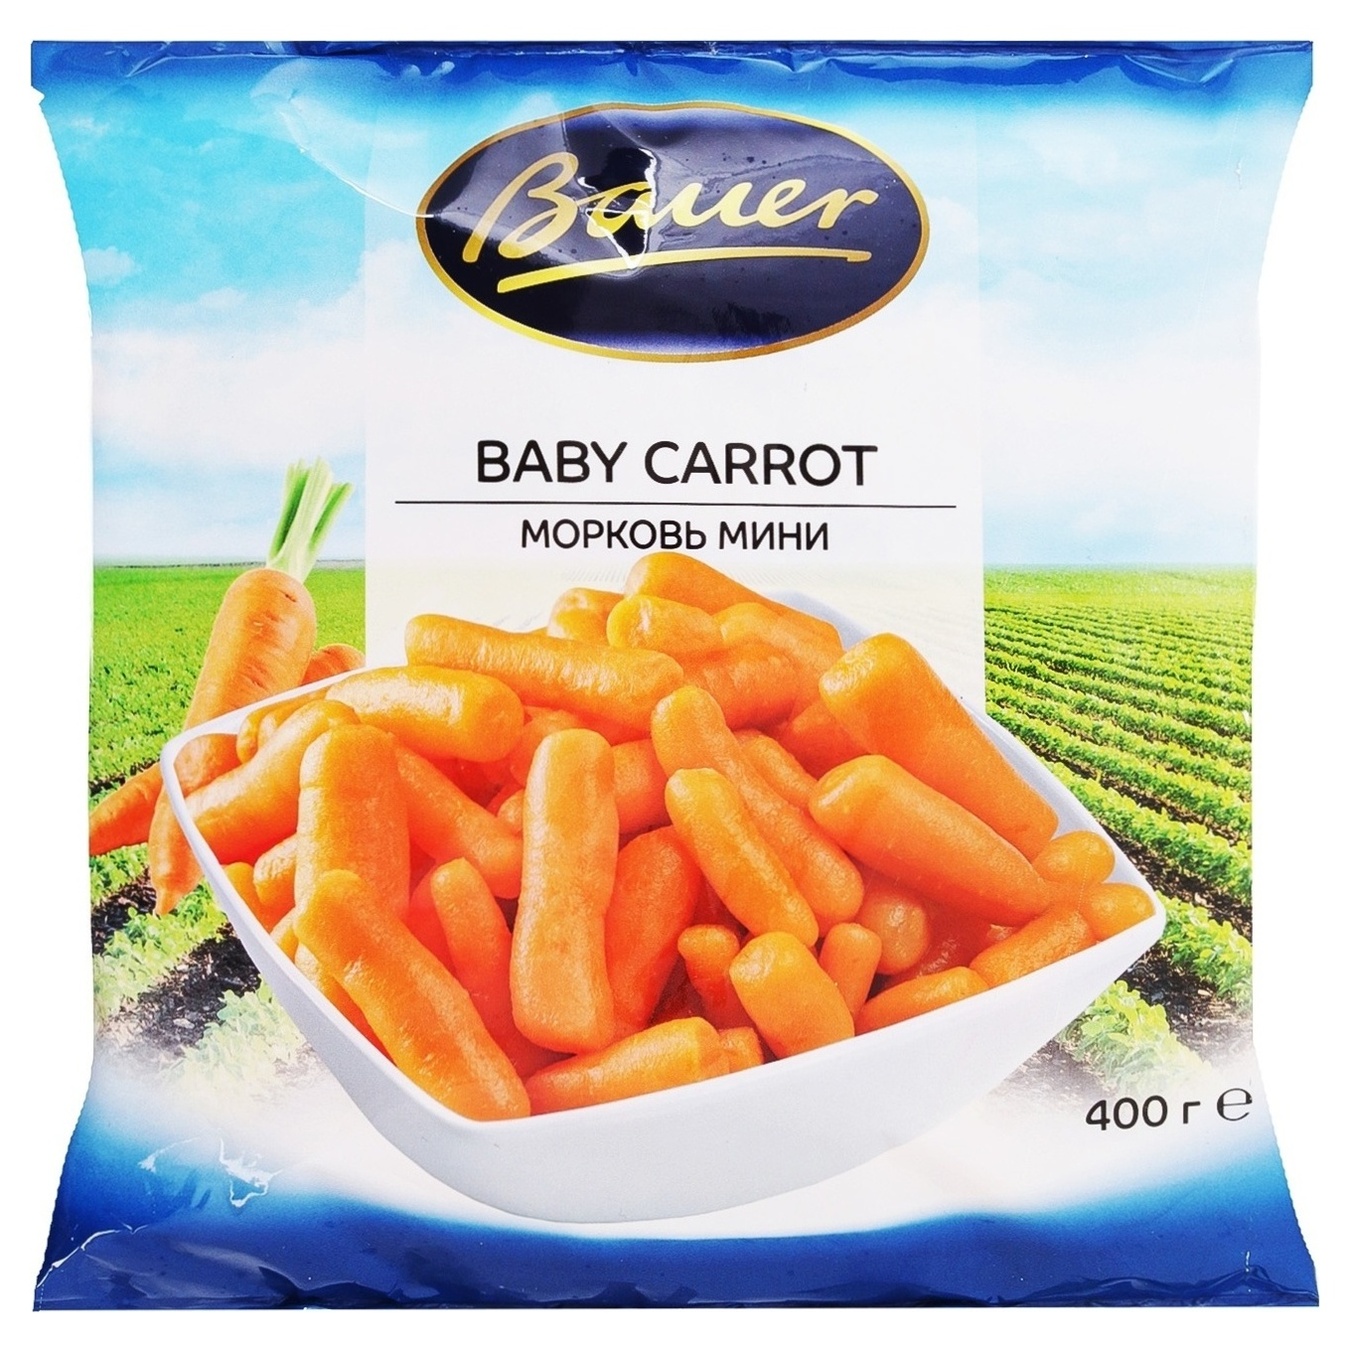 Frozen mono-vegetables Bauer Mini Carrot 400g